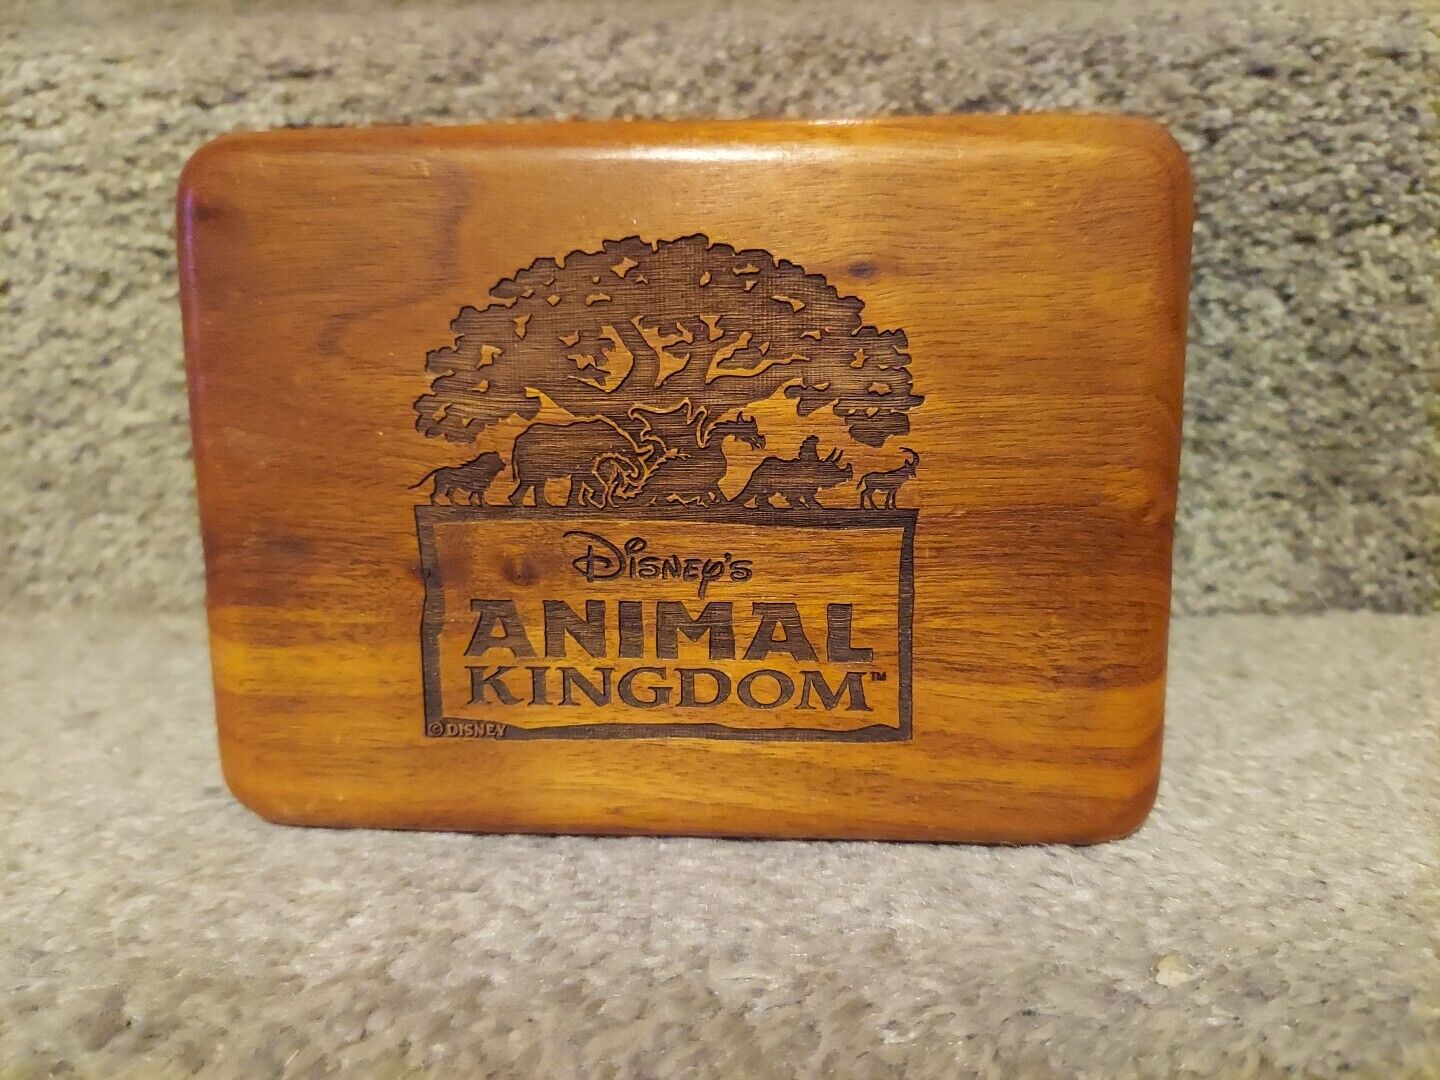 Vintage Disney's Animal Kingdom Laser Engraved Wood Hinged Trinket/Jewelry Box